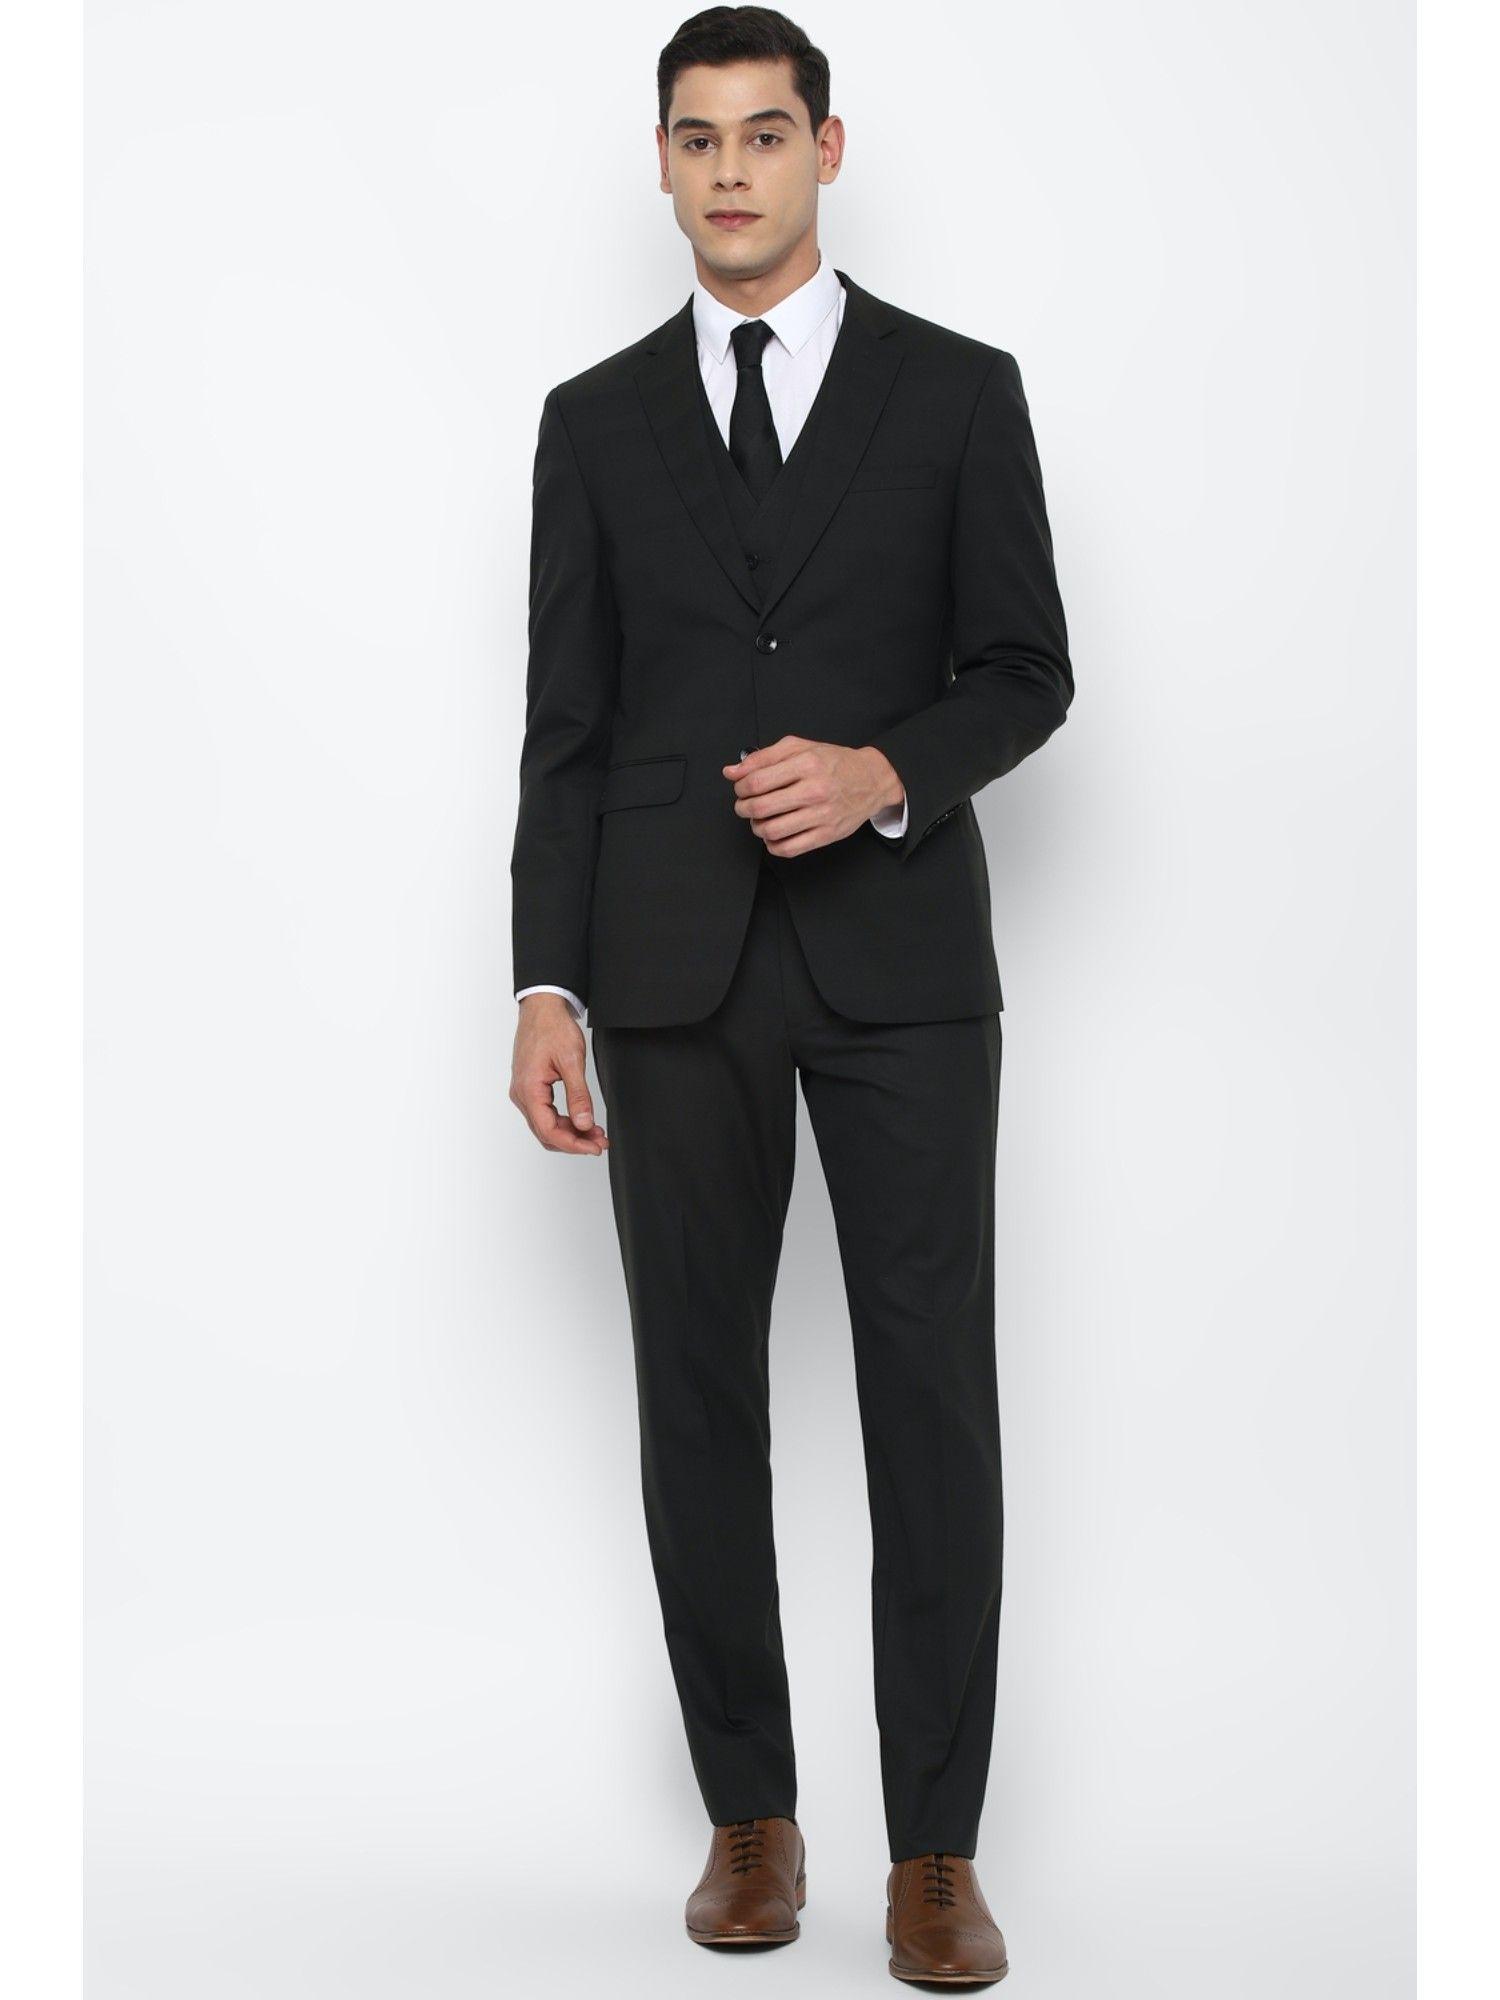 black three piece suit